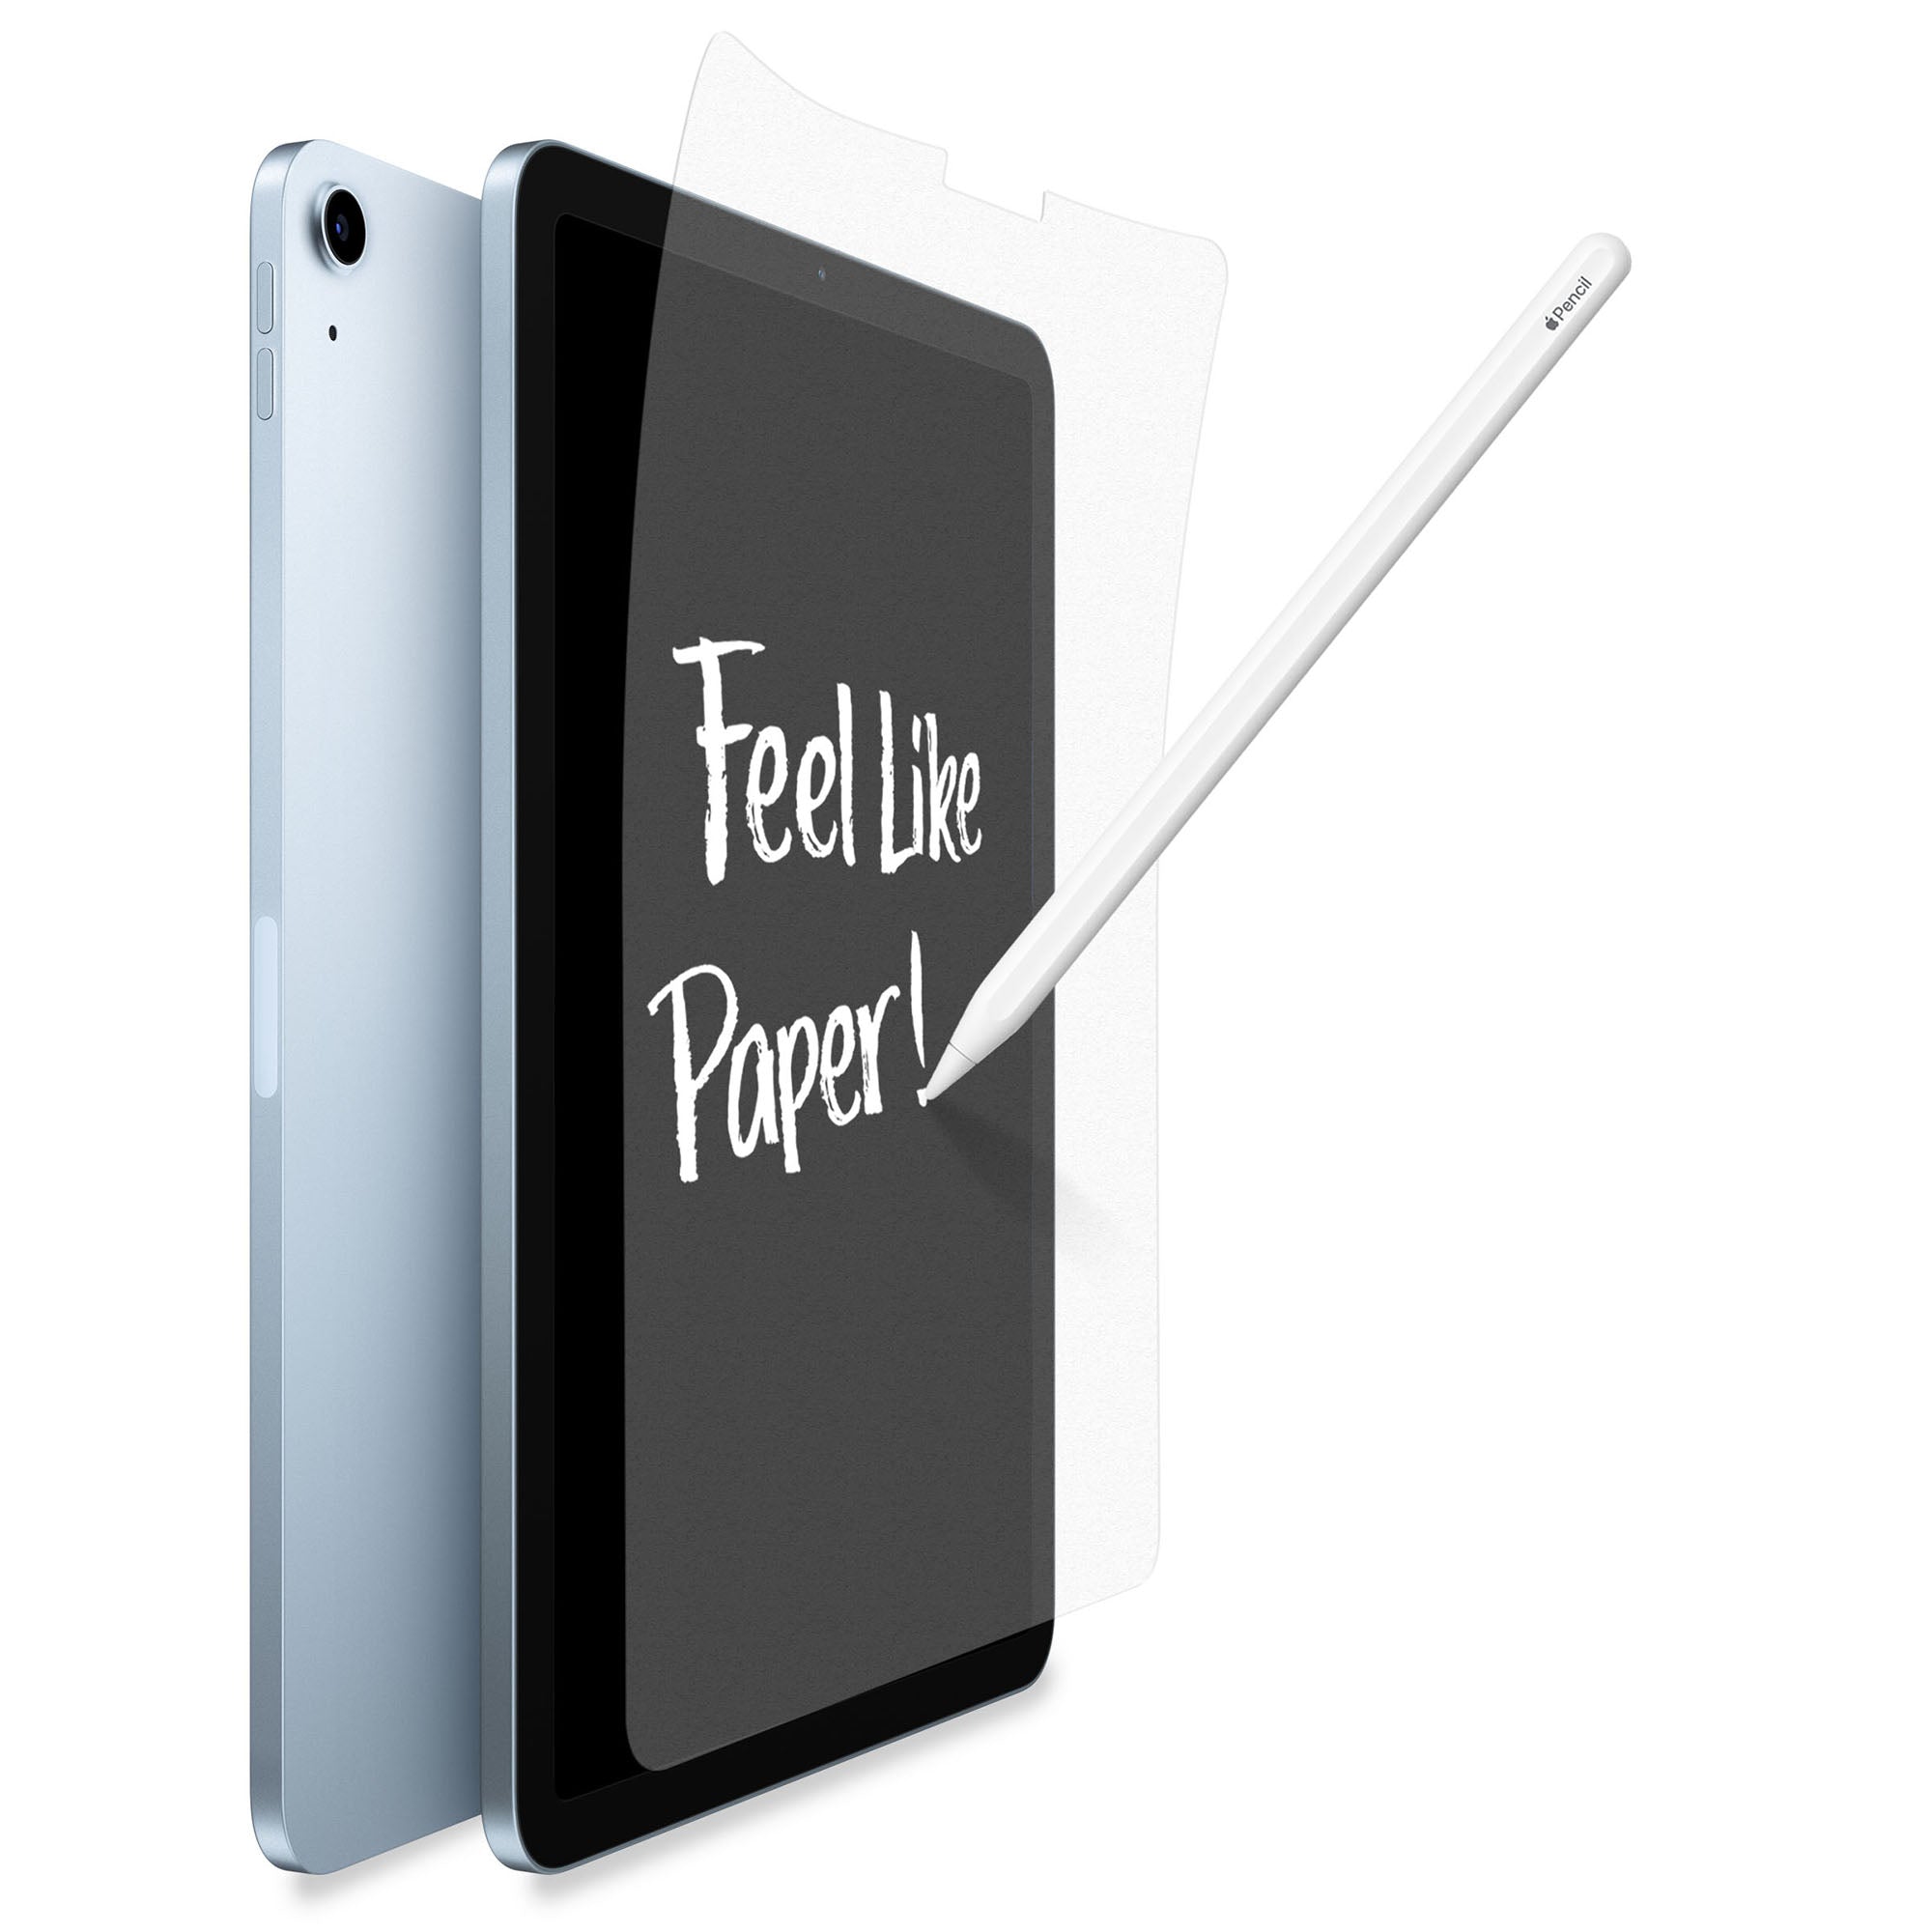 Torrii Bodyfilm Paper Like Pet Film Protector For iPad Air 10.9 (2020) - Clear